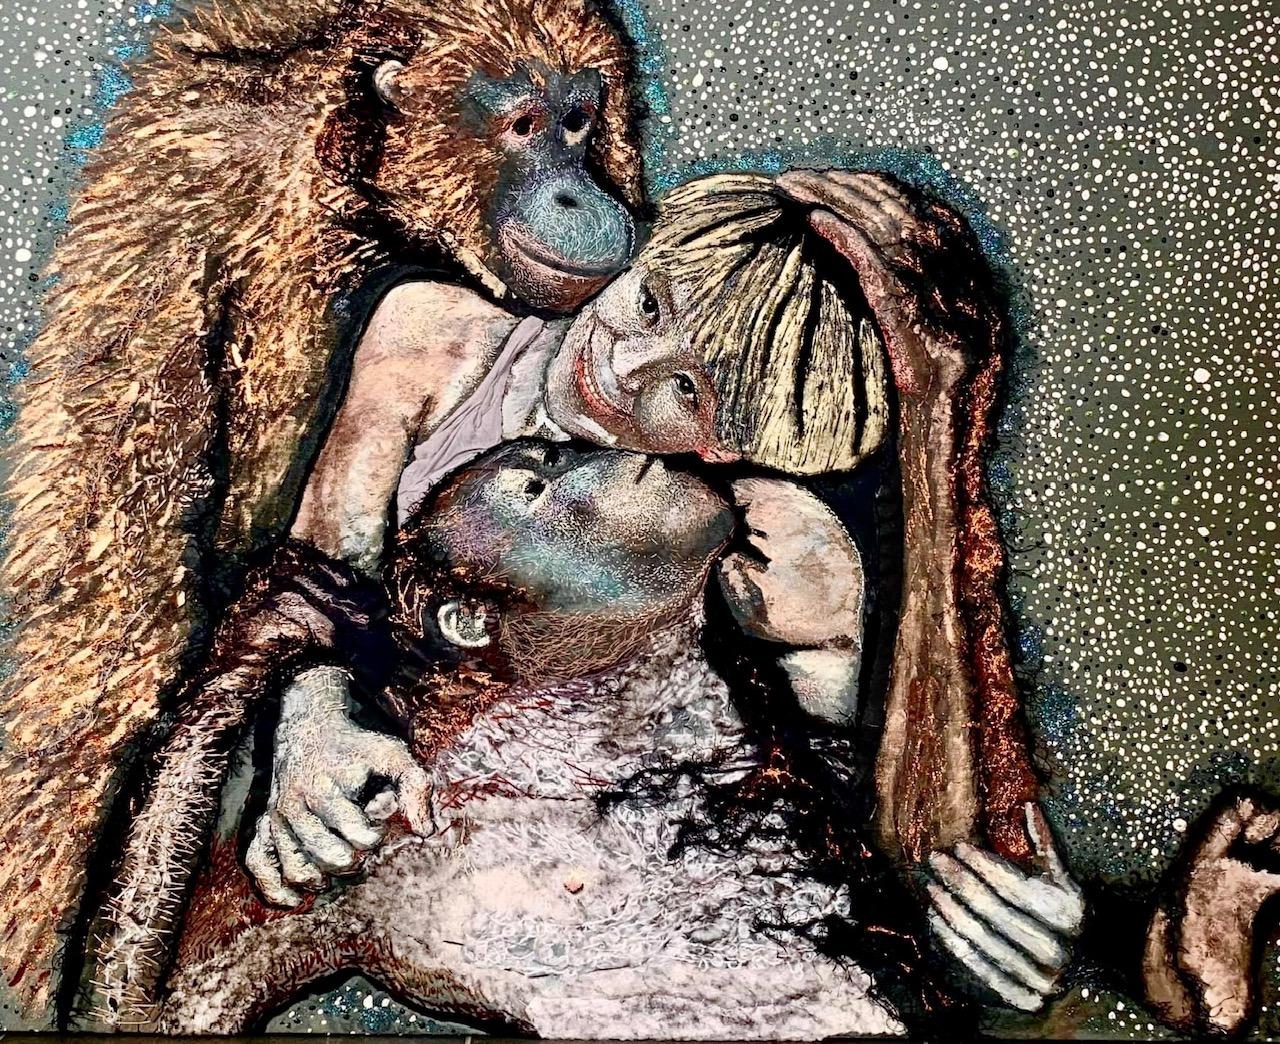 Two orangutans and me by Yuki Kiyohara - Mixed Media Art by Unknown